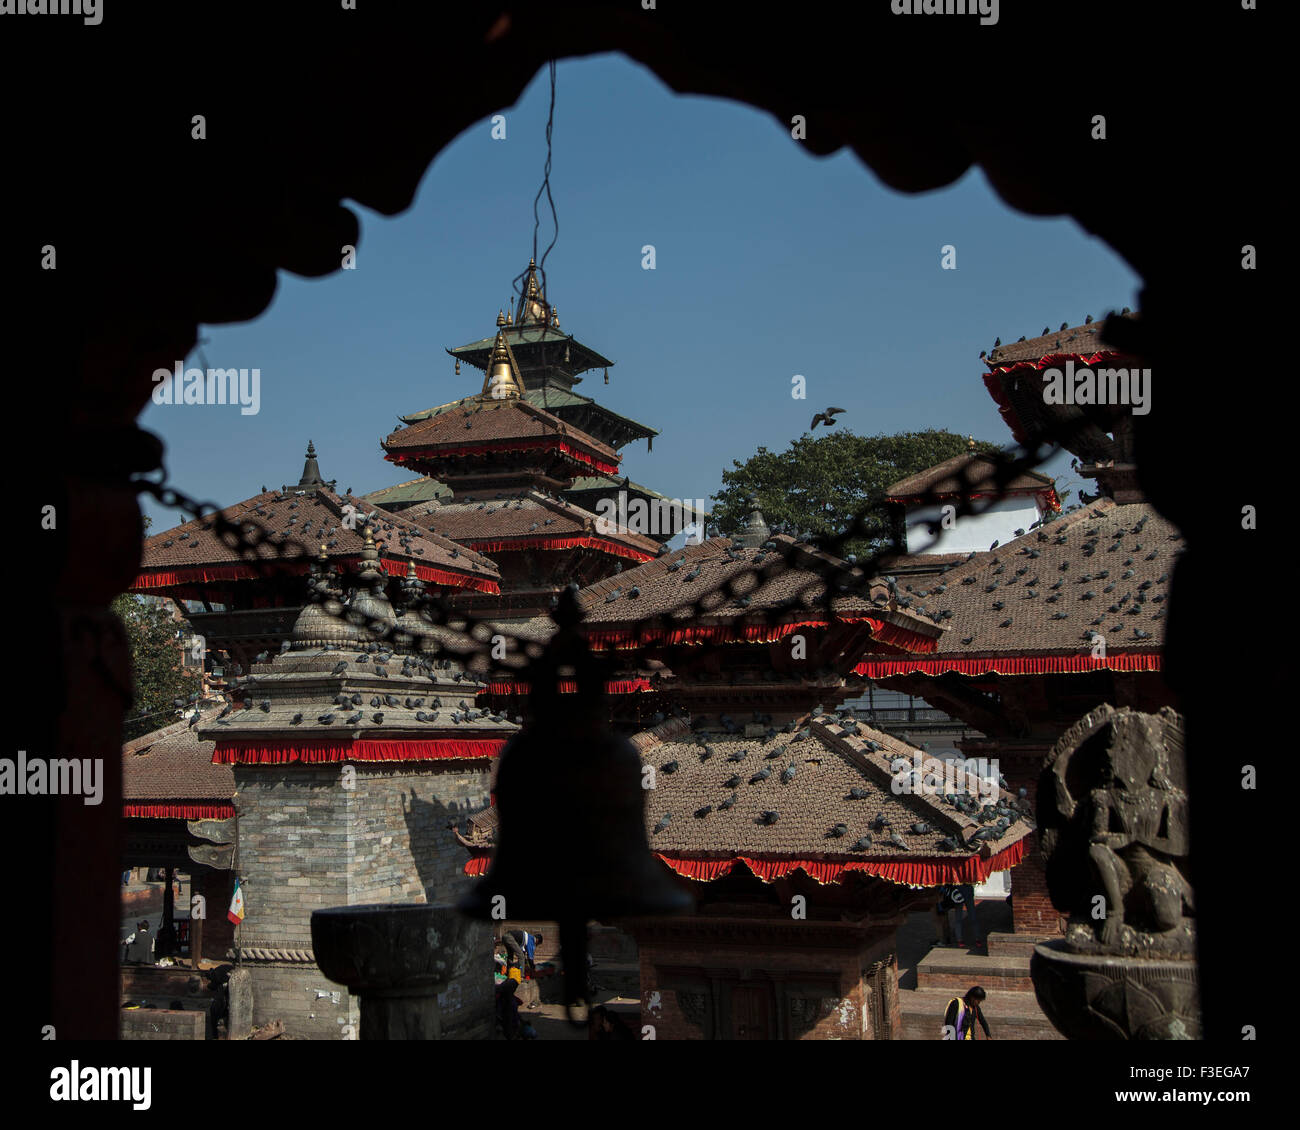 Kathmandu Durbar Square a UNESCO World Heritage site before the 2015 earthquake Stock Photo